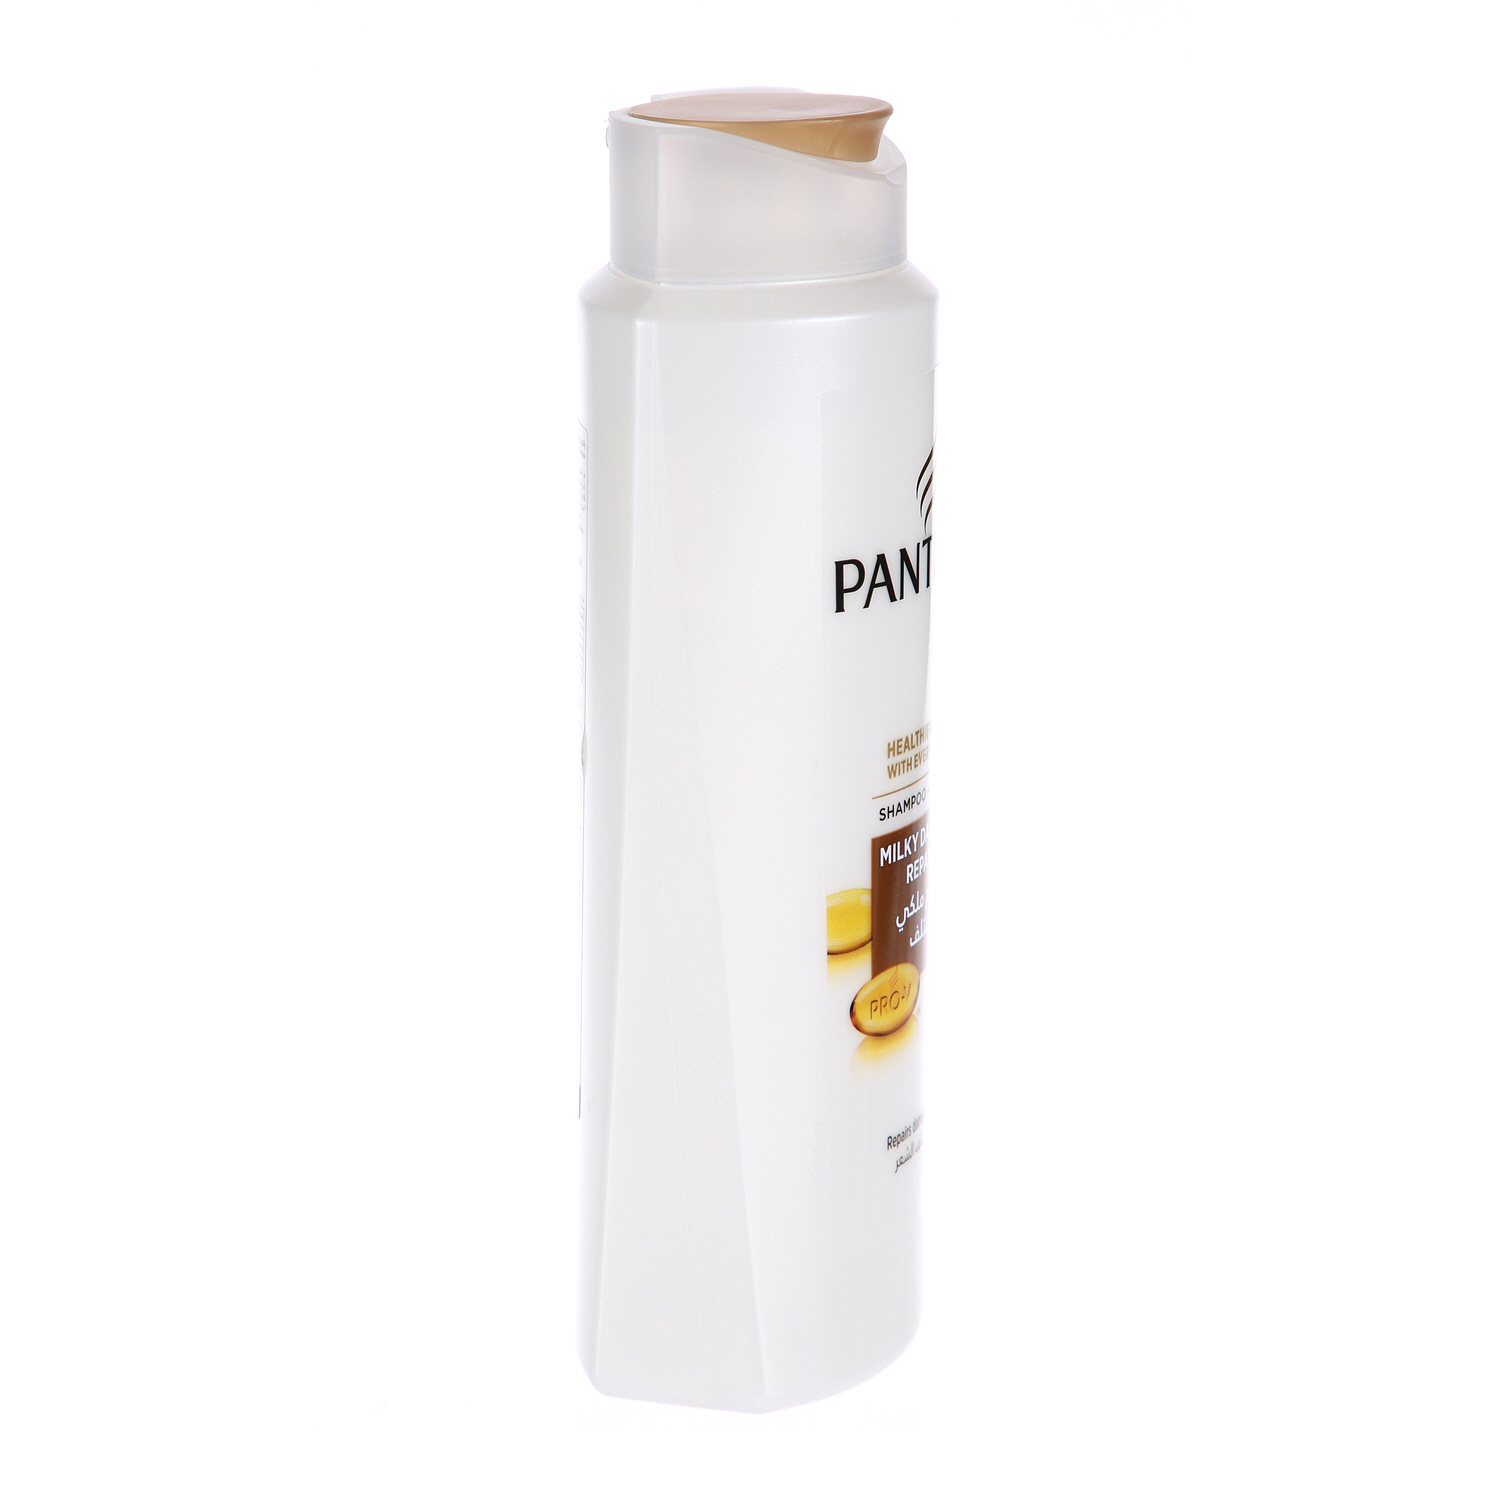 Pantene Shampoo Milky Damage Repair 600ml